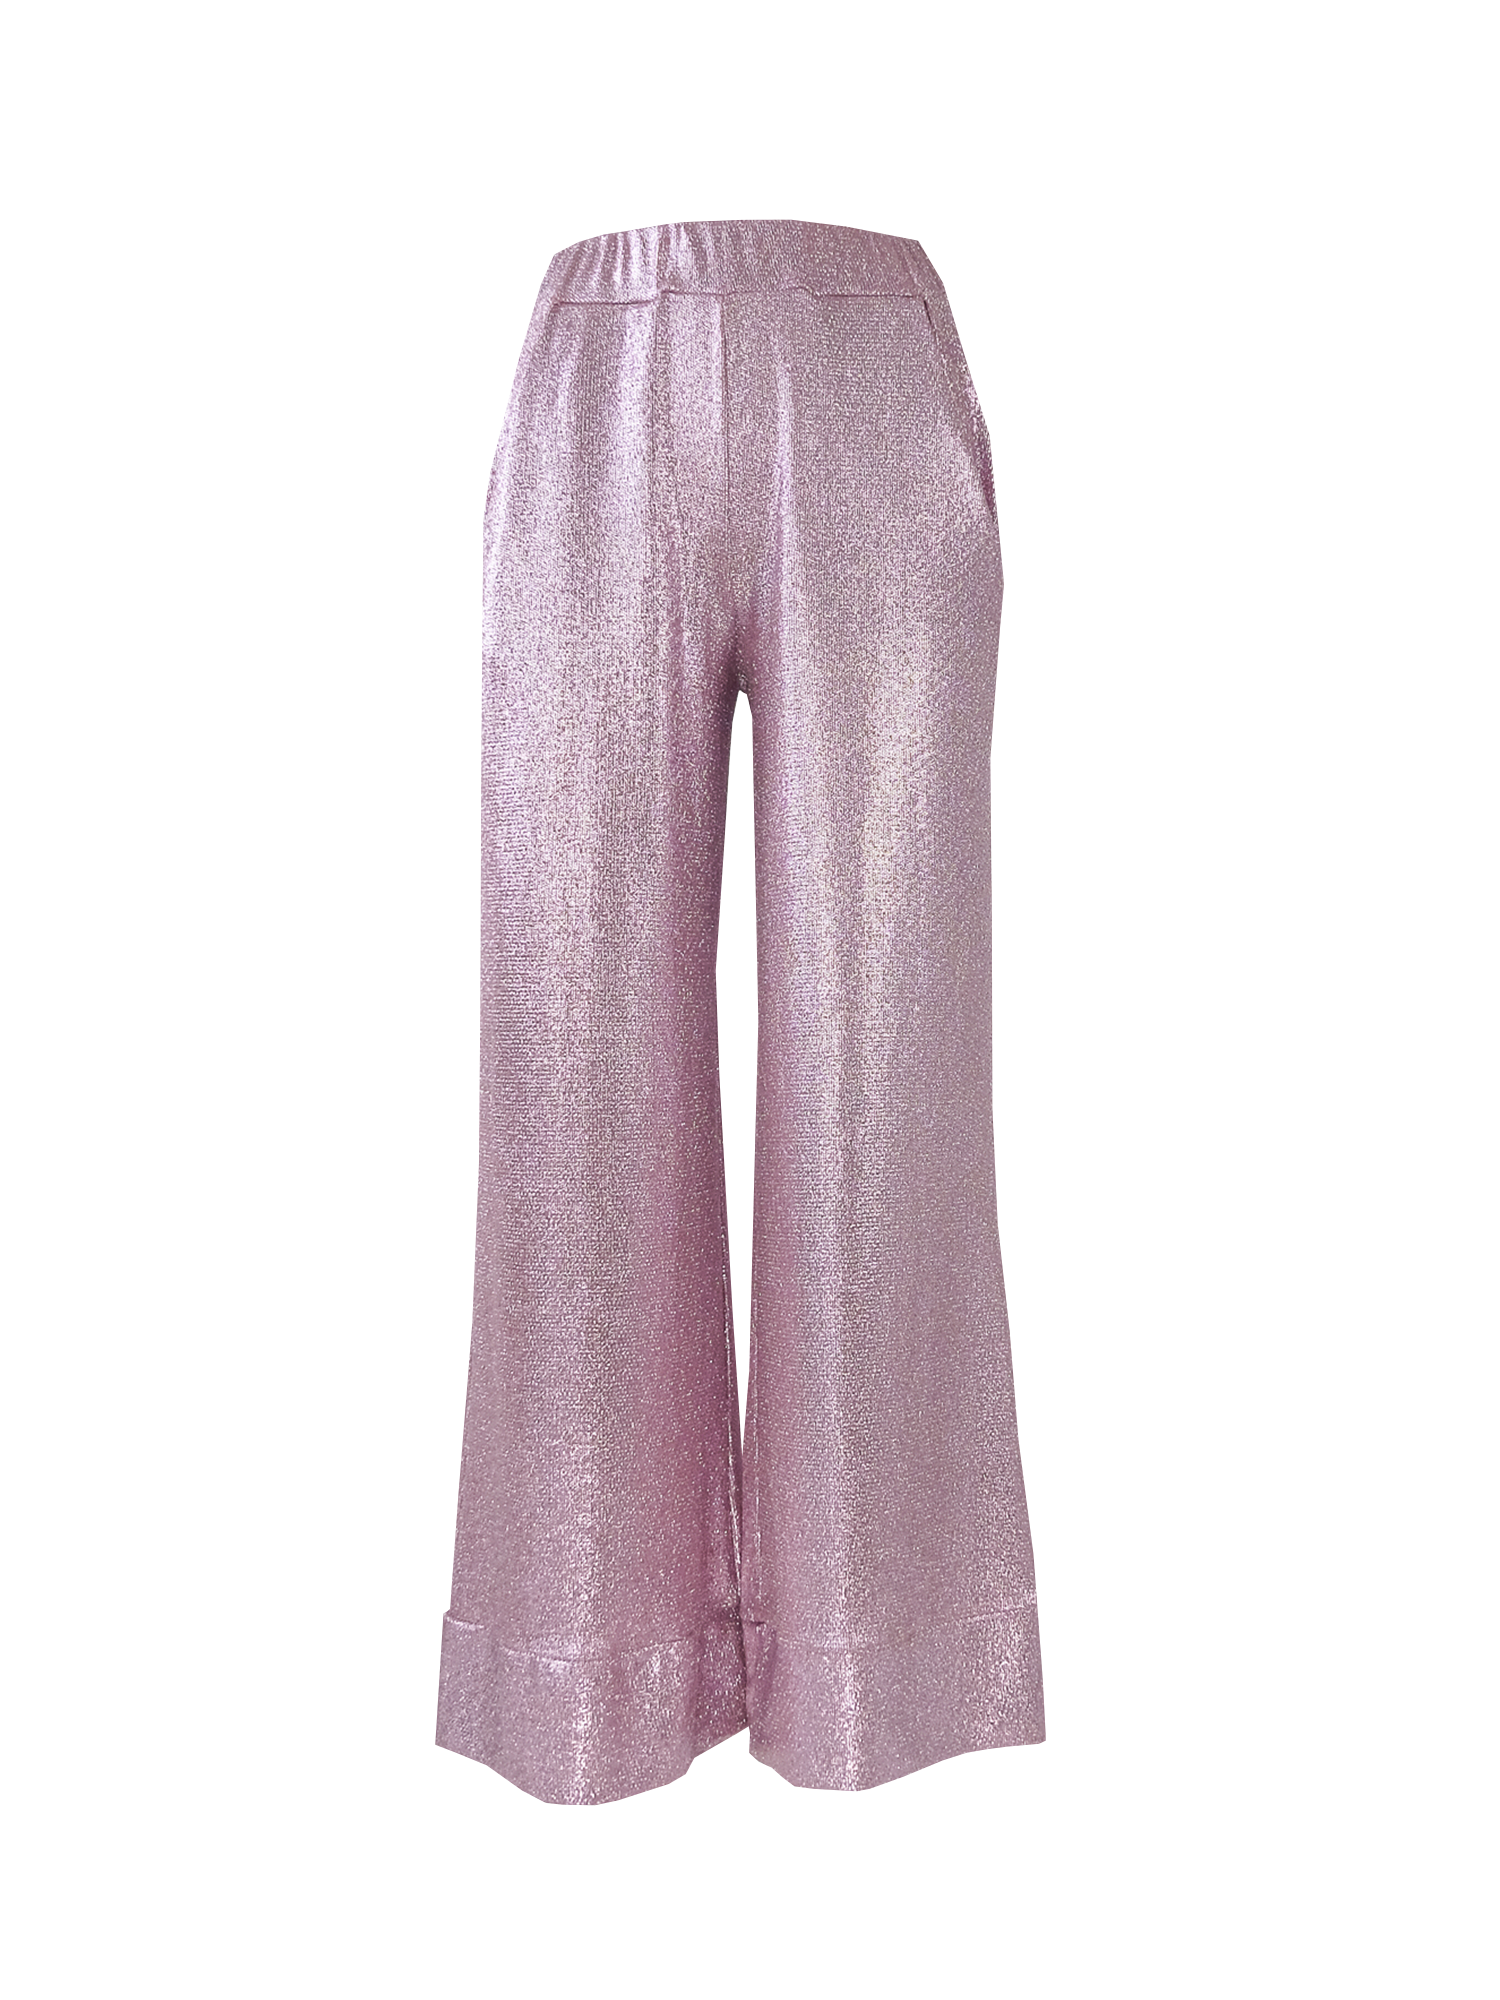 AIDA - pink lurex palazzo pants